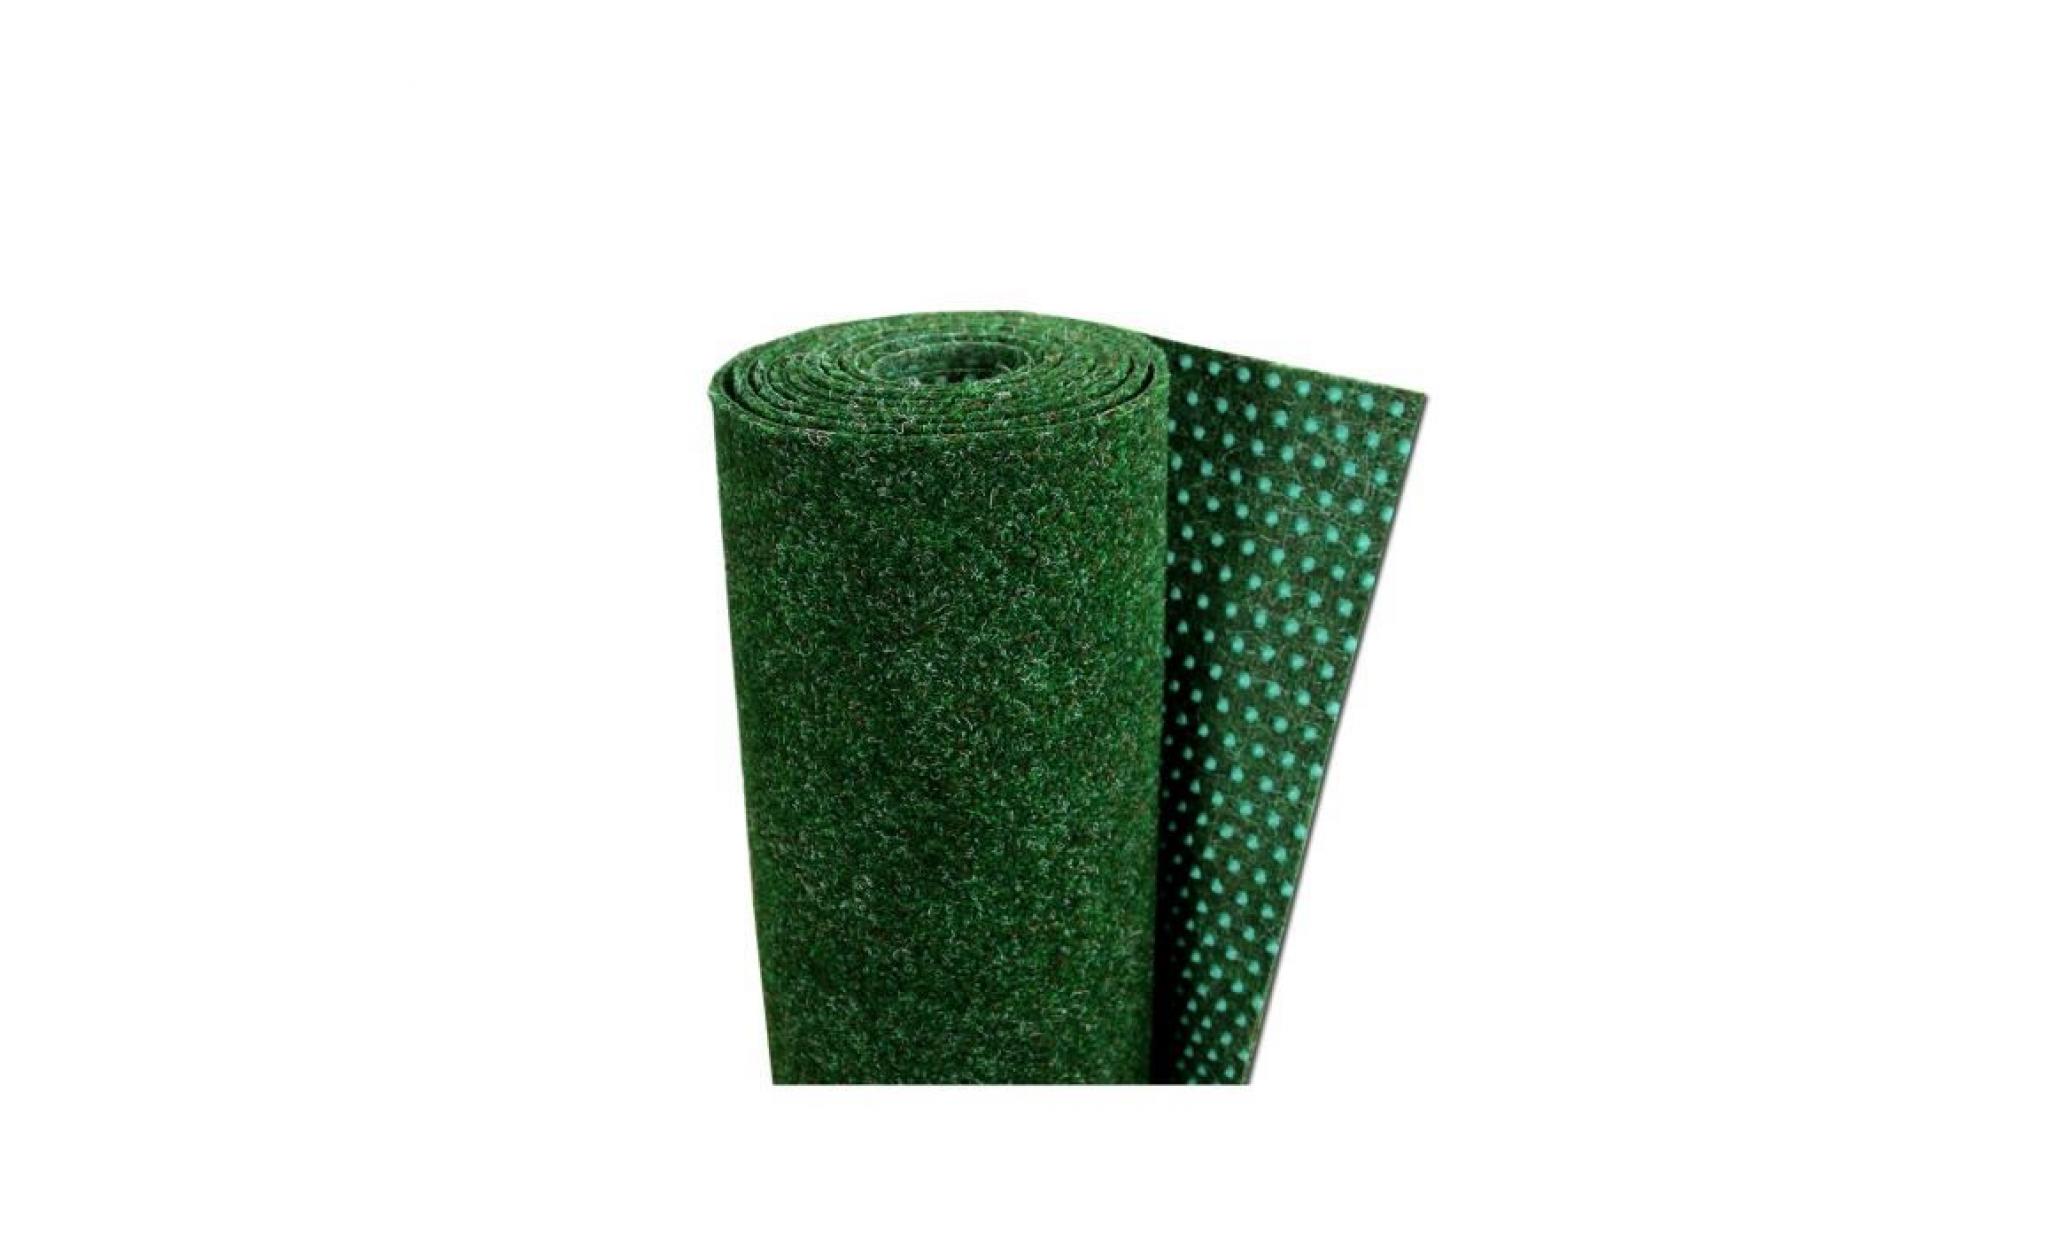 kingston   tapis type gazon artificiel – pour jardin, terrasse, balcon   anthracite [400x150 cm] pas cher